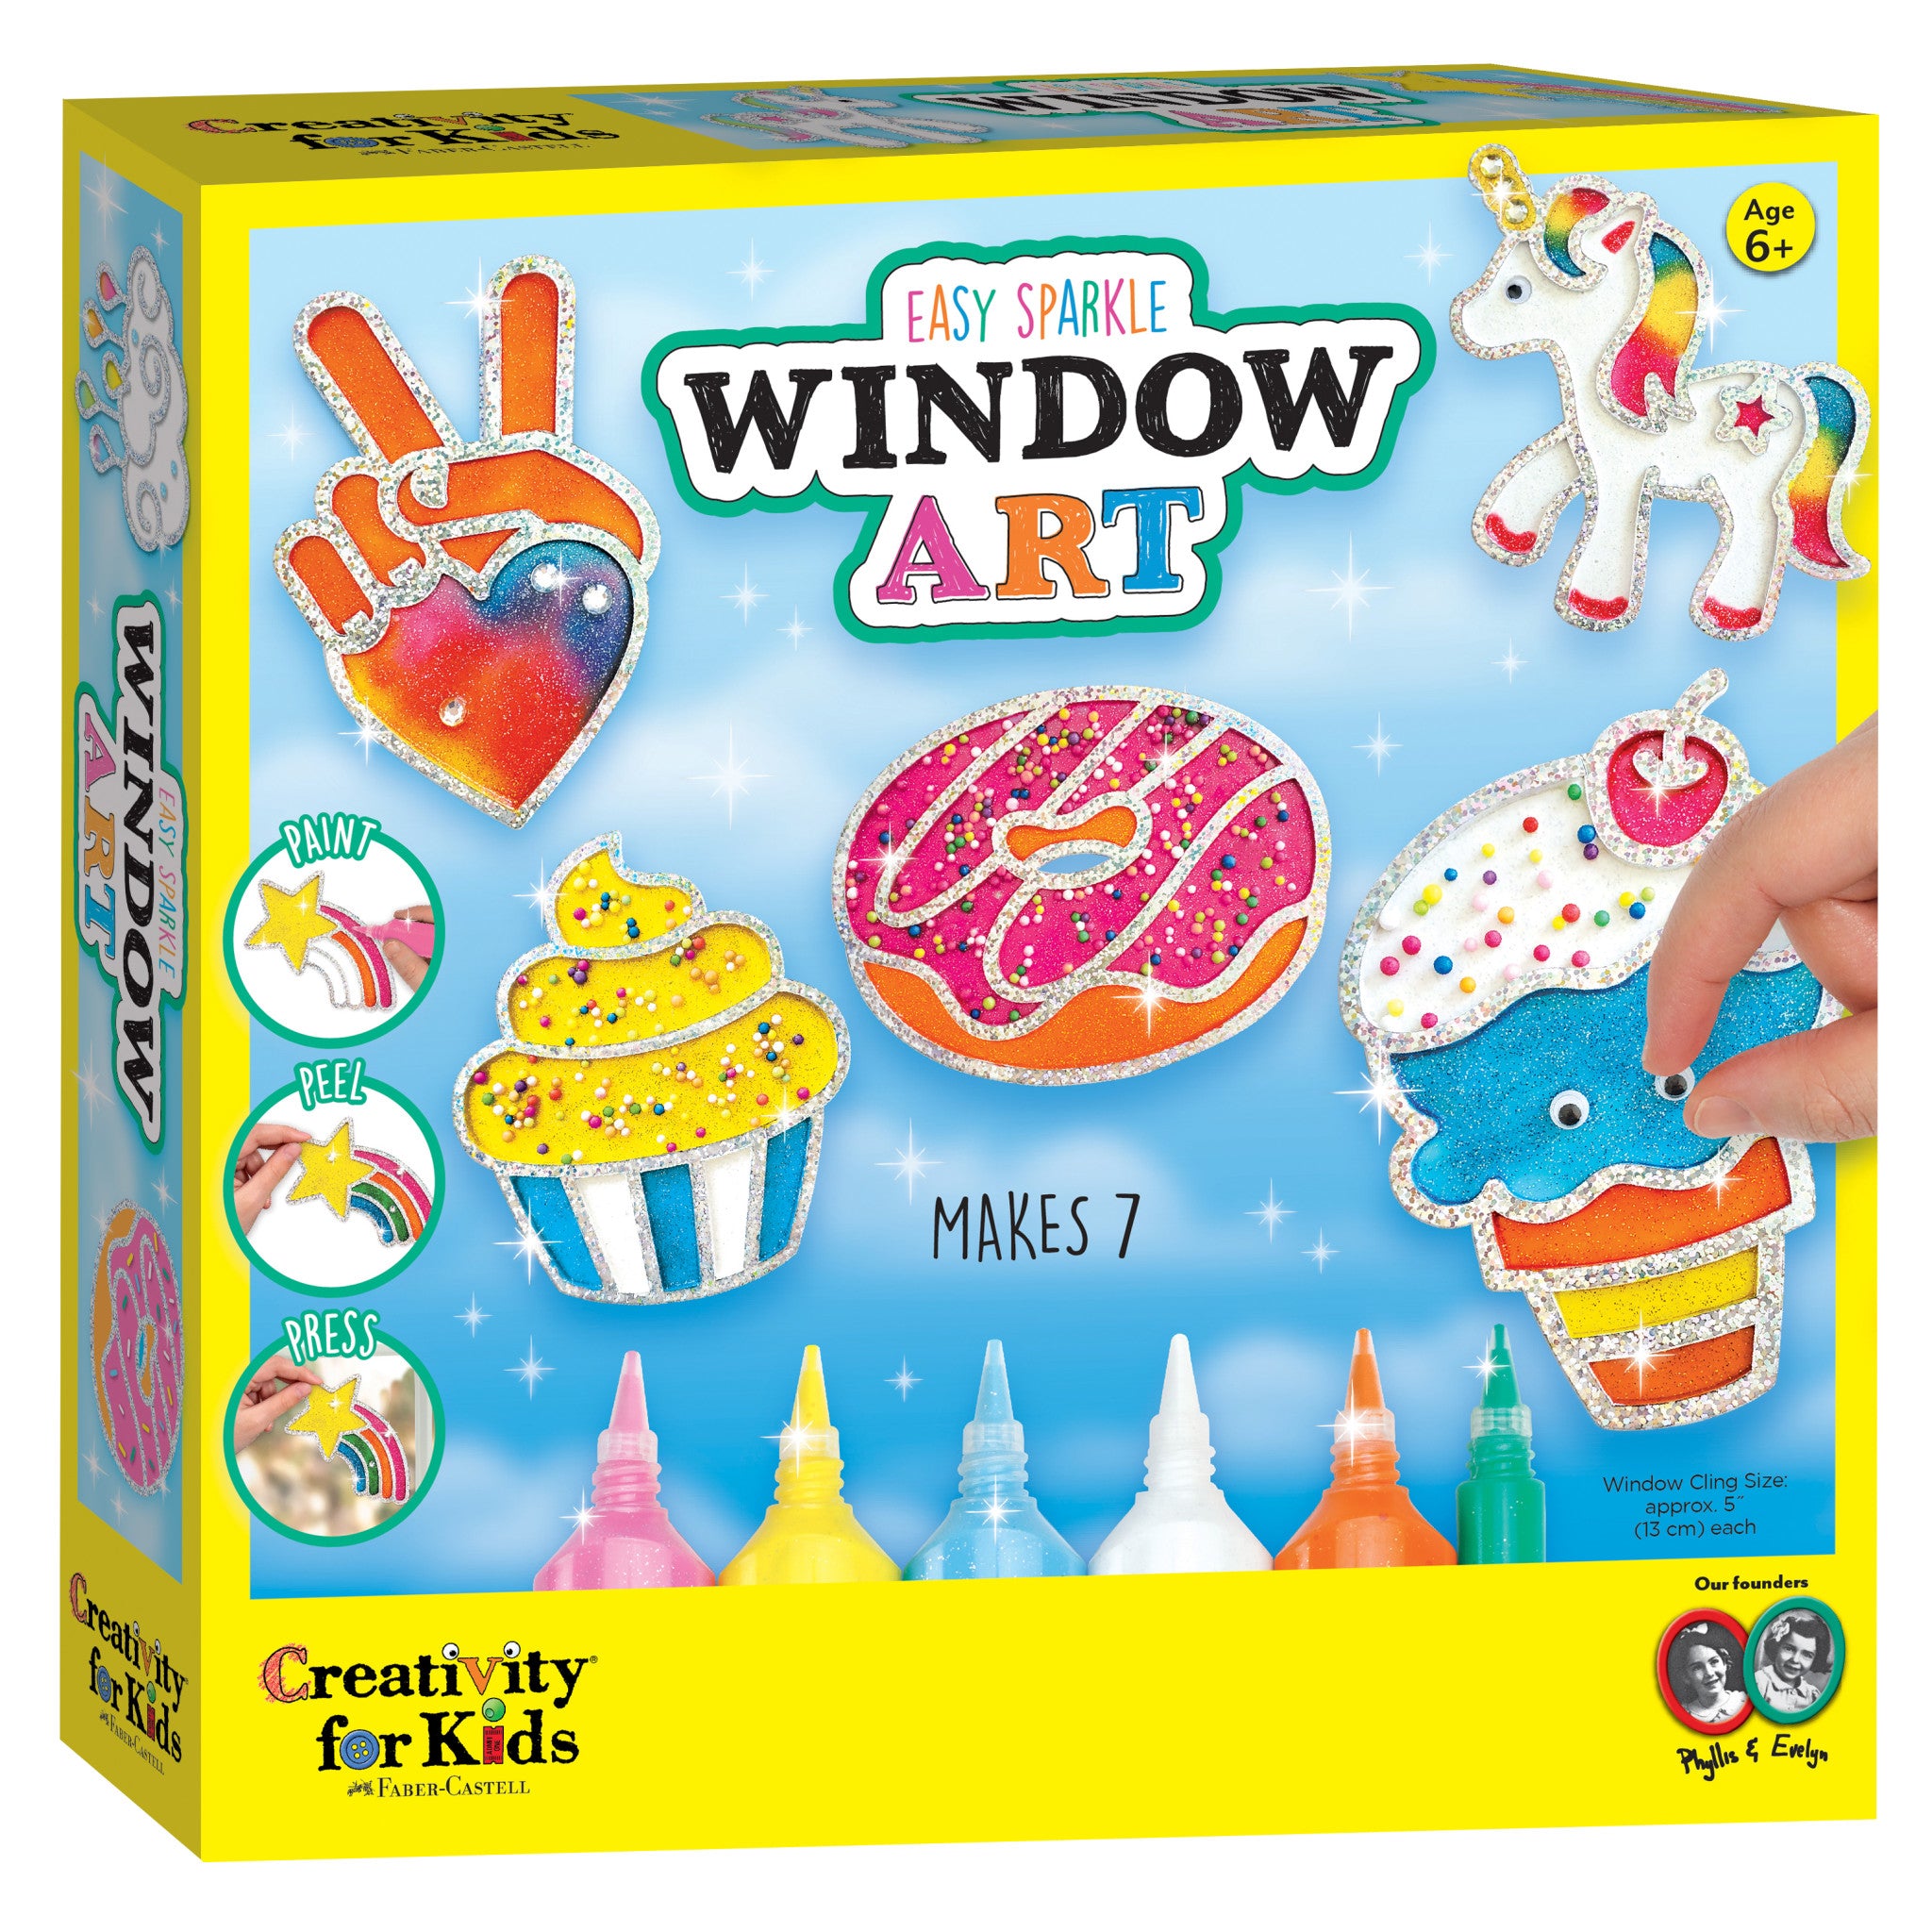 Creativity for Kids Easy Sparkle Window Art